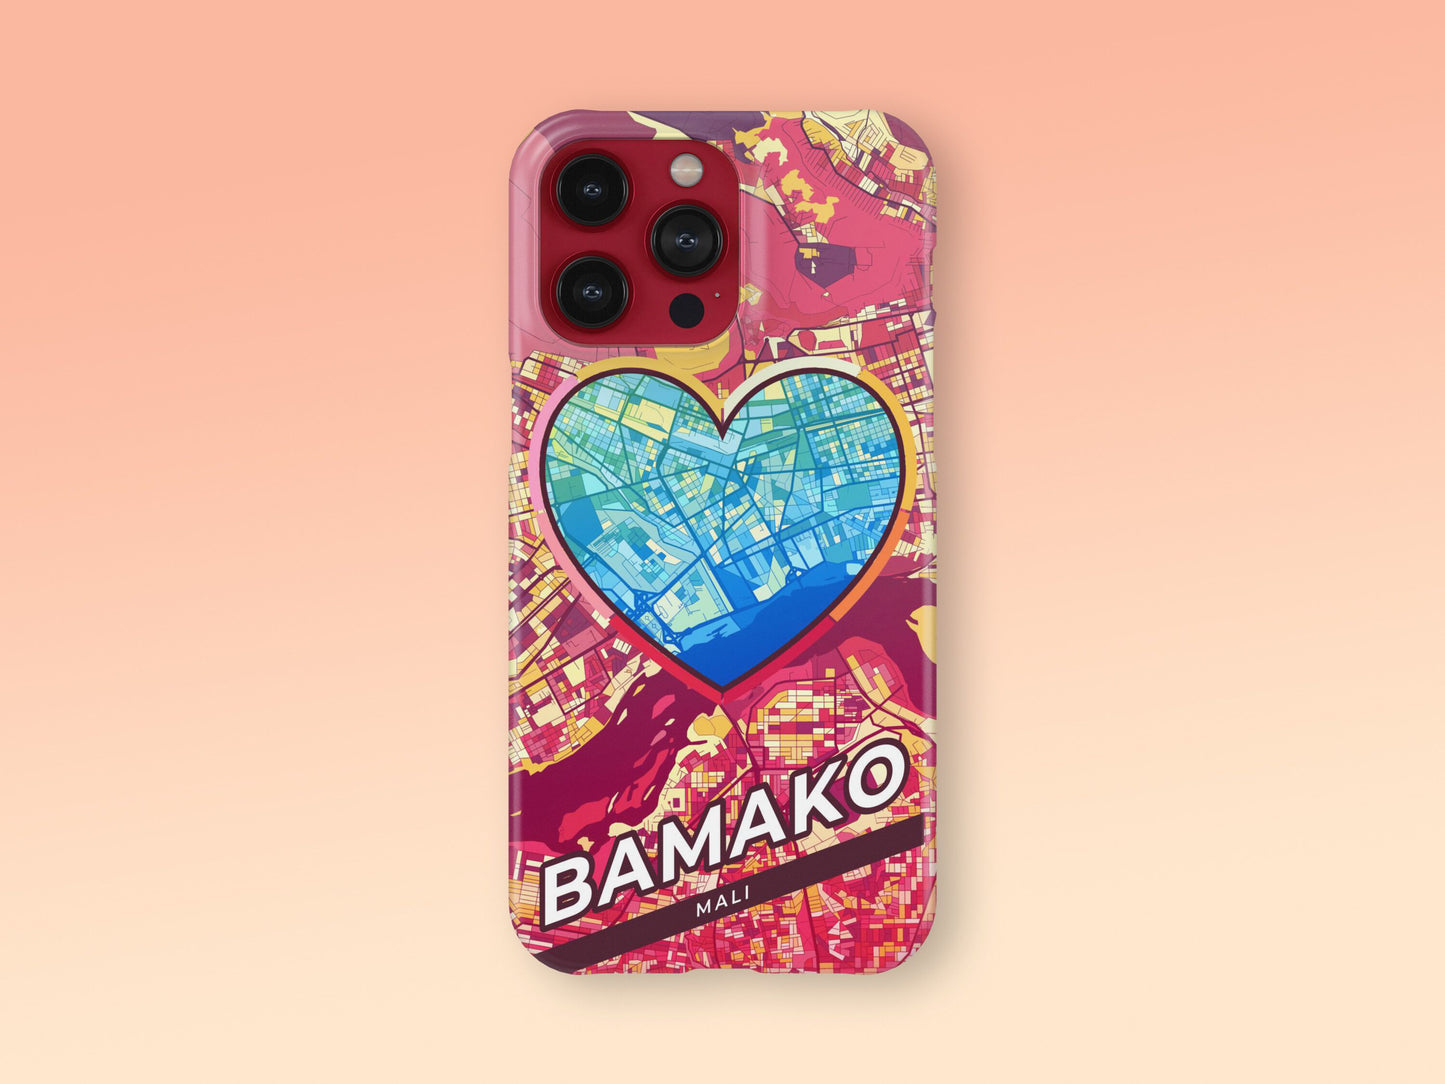 Bamako Mali slim phone case with colorful icon. Birthday, wedding or housewarming gift. Couple match cases. 2